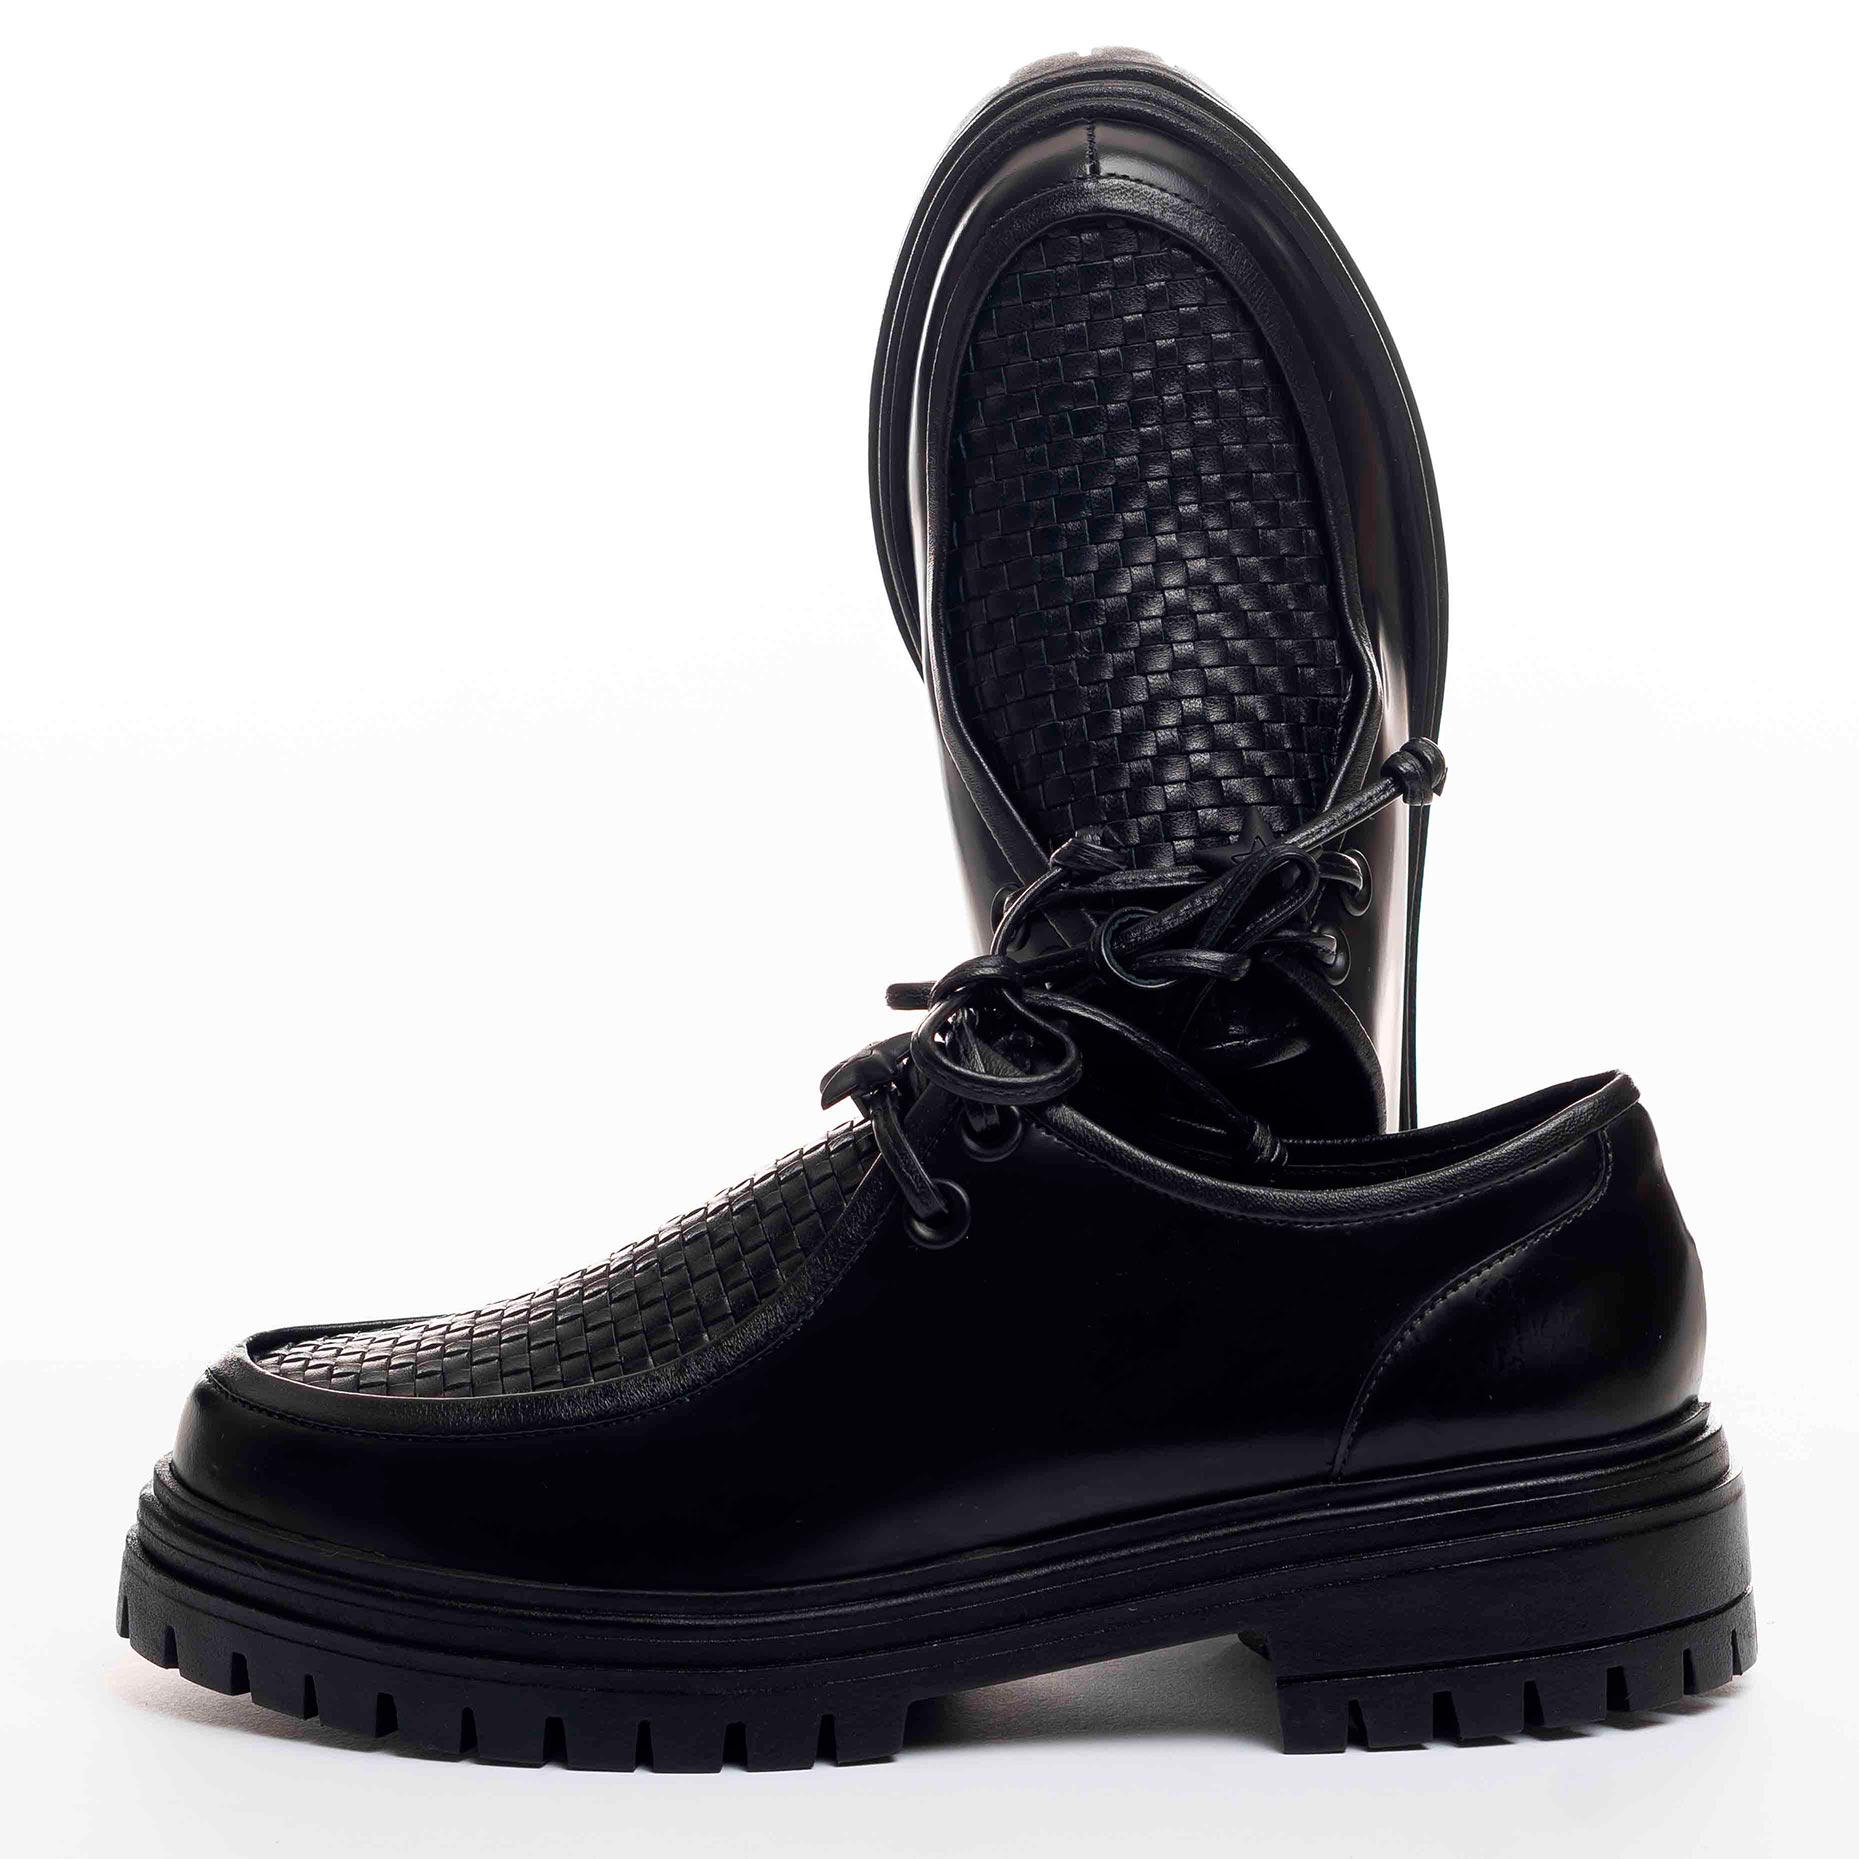 Reggy Shoe Woven Black